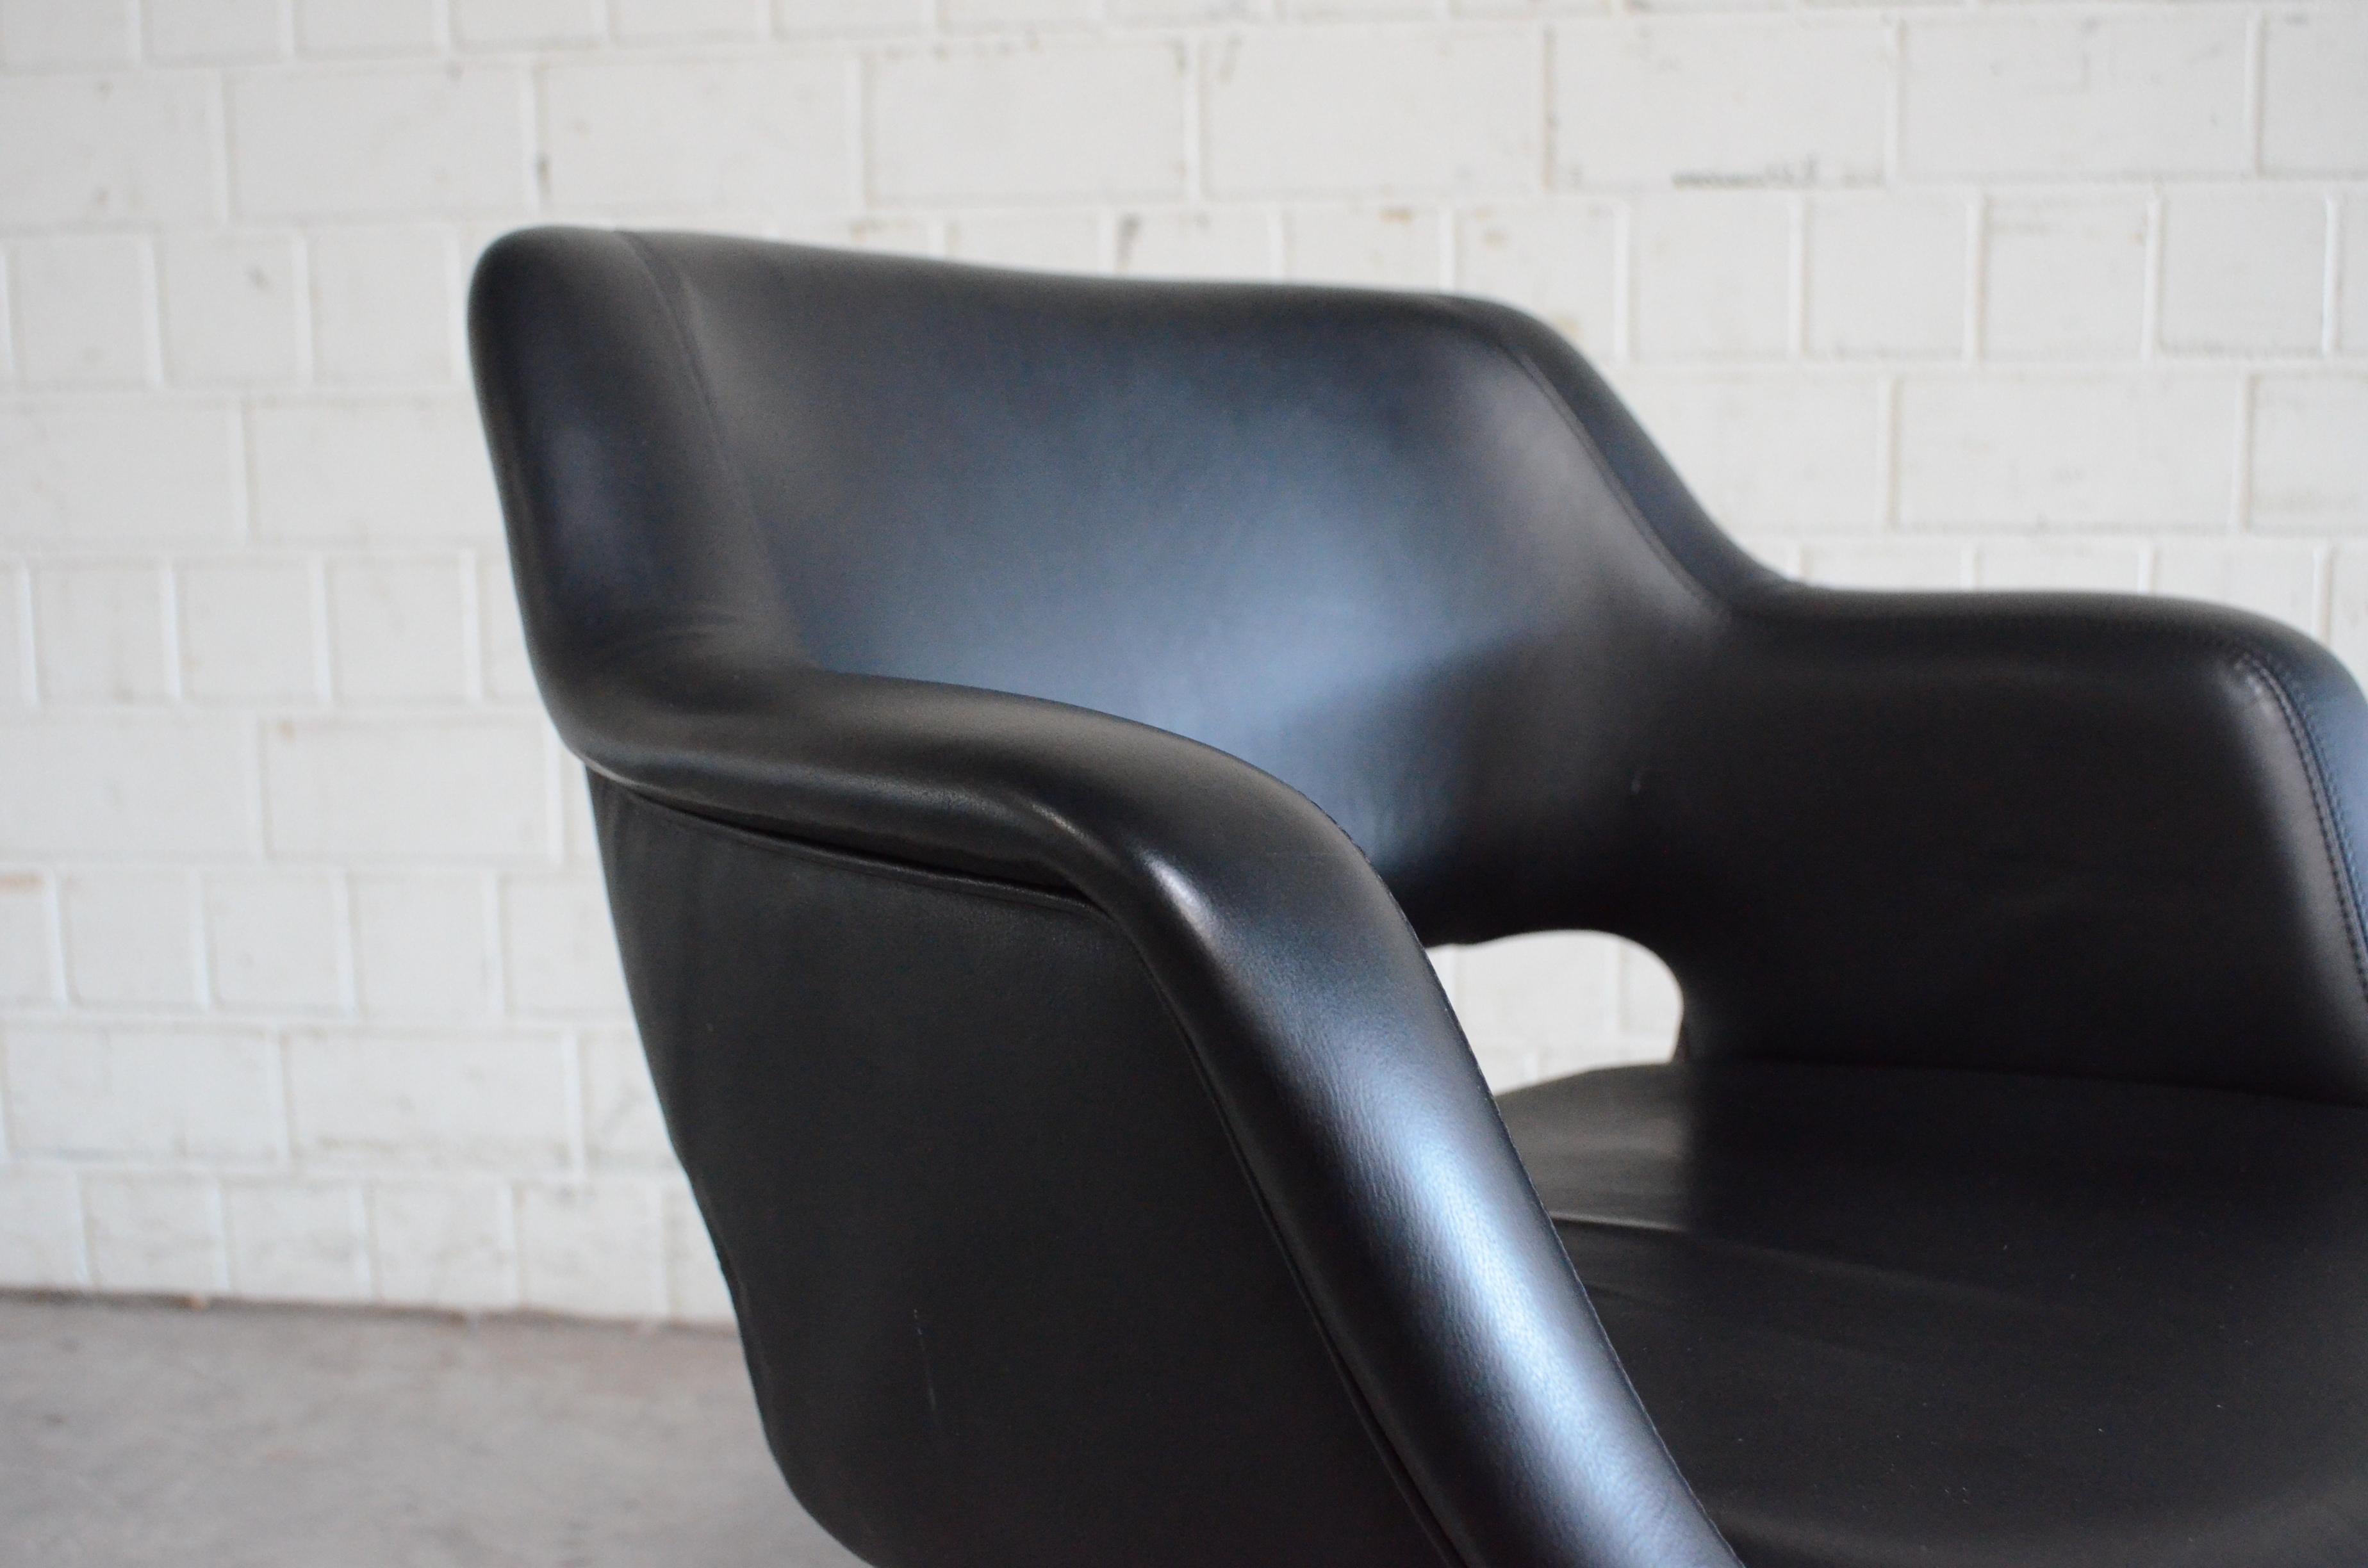 Steel Olli Mannermaa Pair of Leather Kilta Chair by Eugen Schmidt & Cassina Martela For Sale